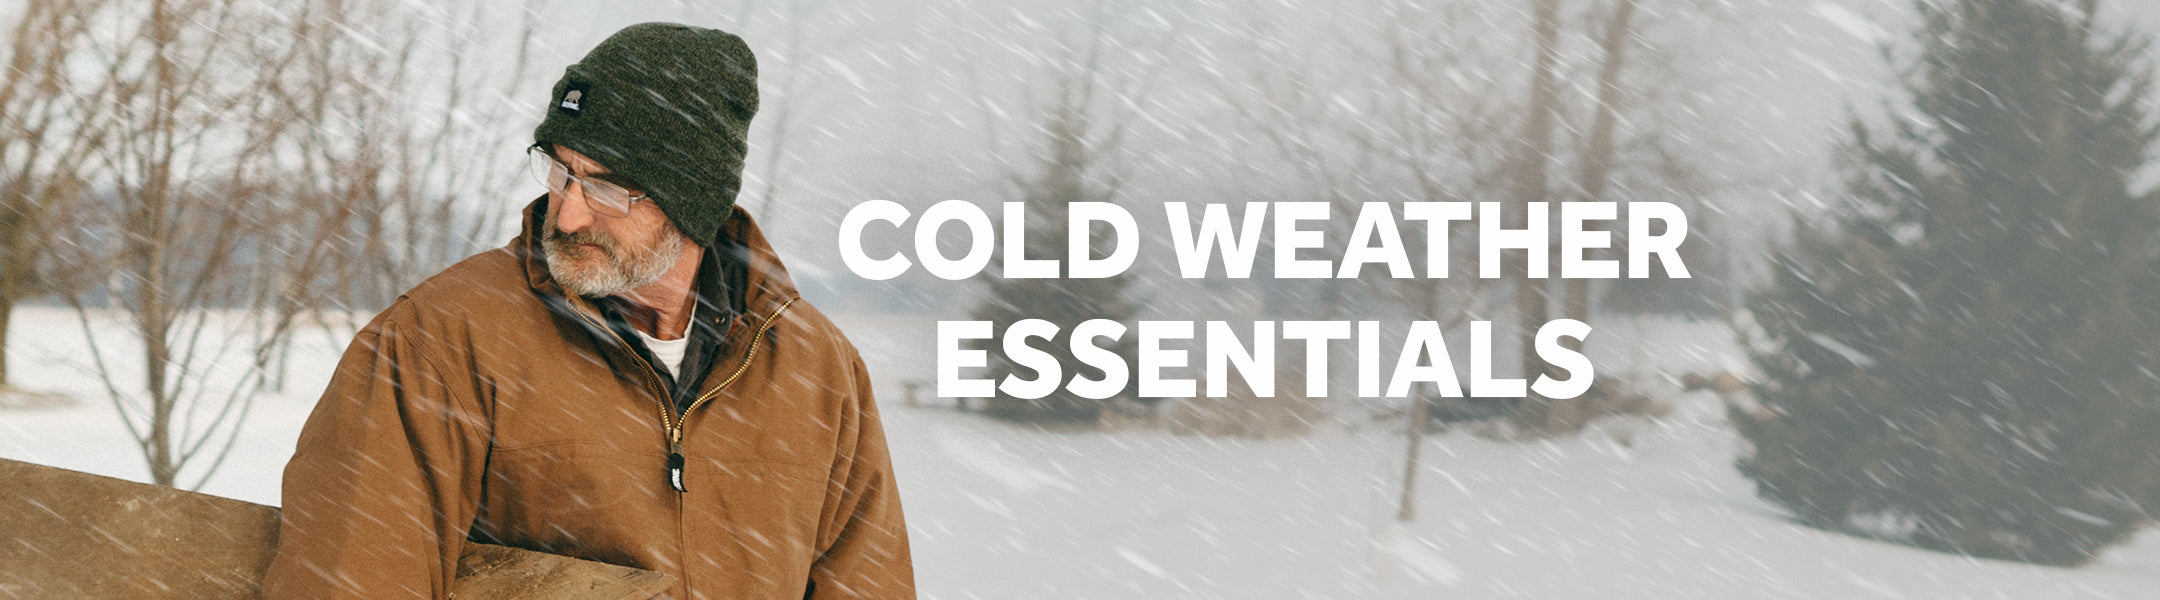 Cold Weather Essentials